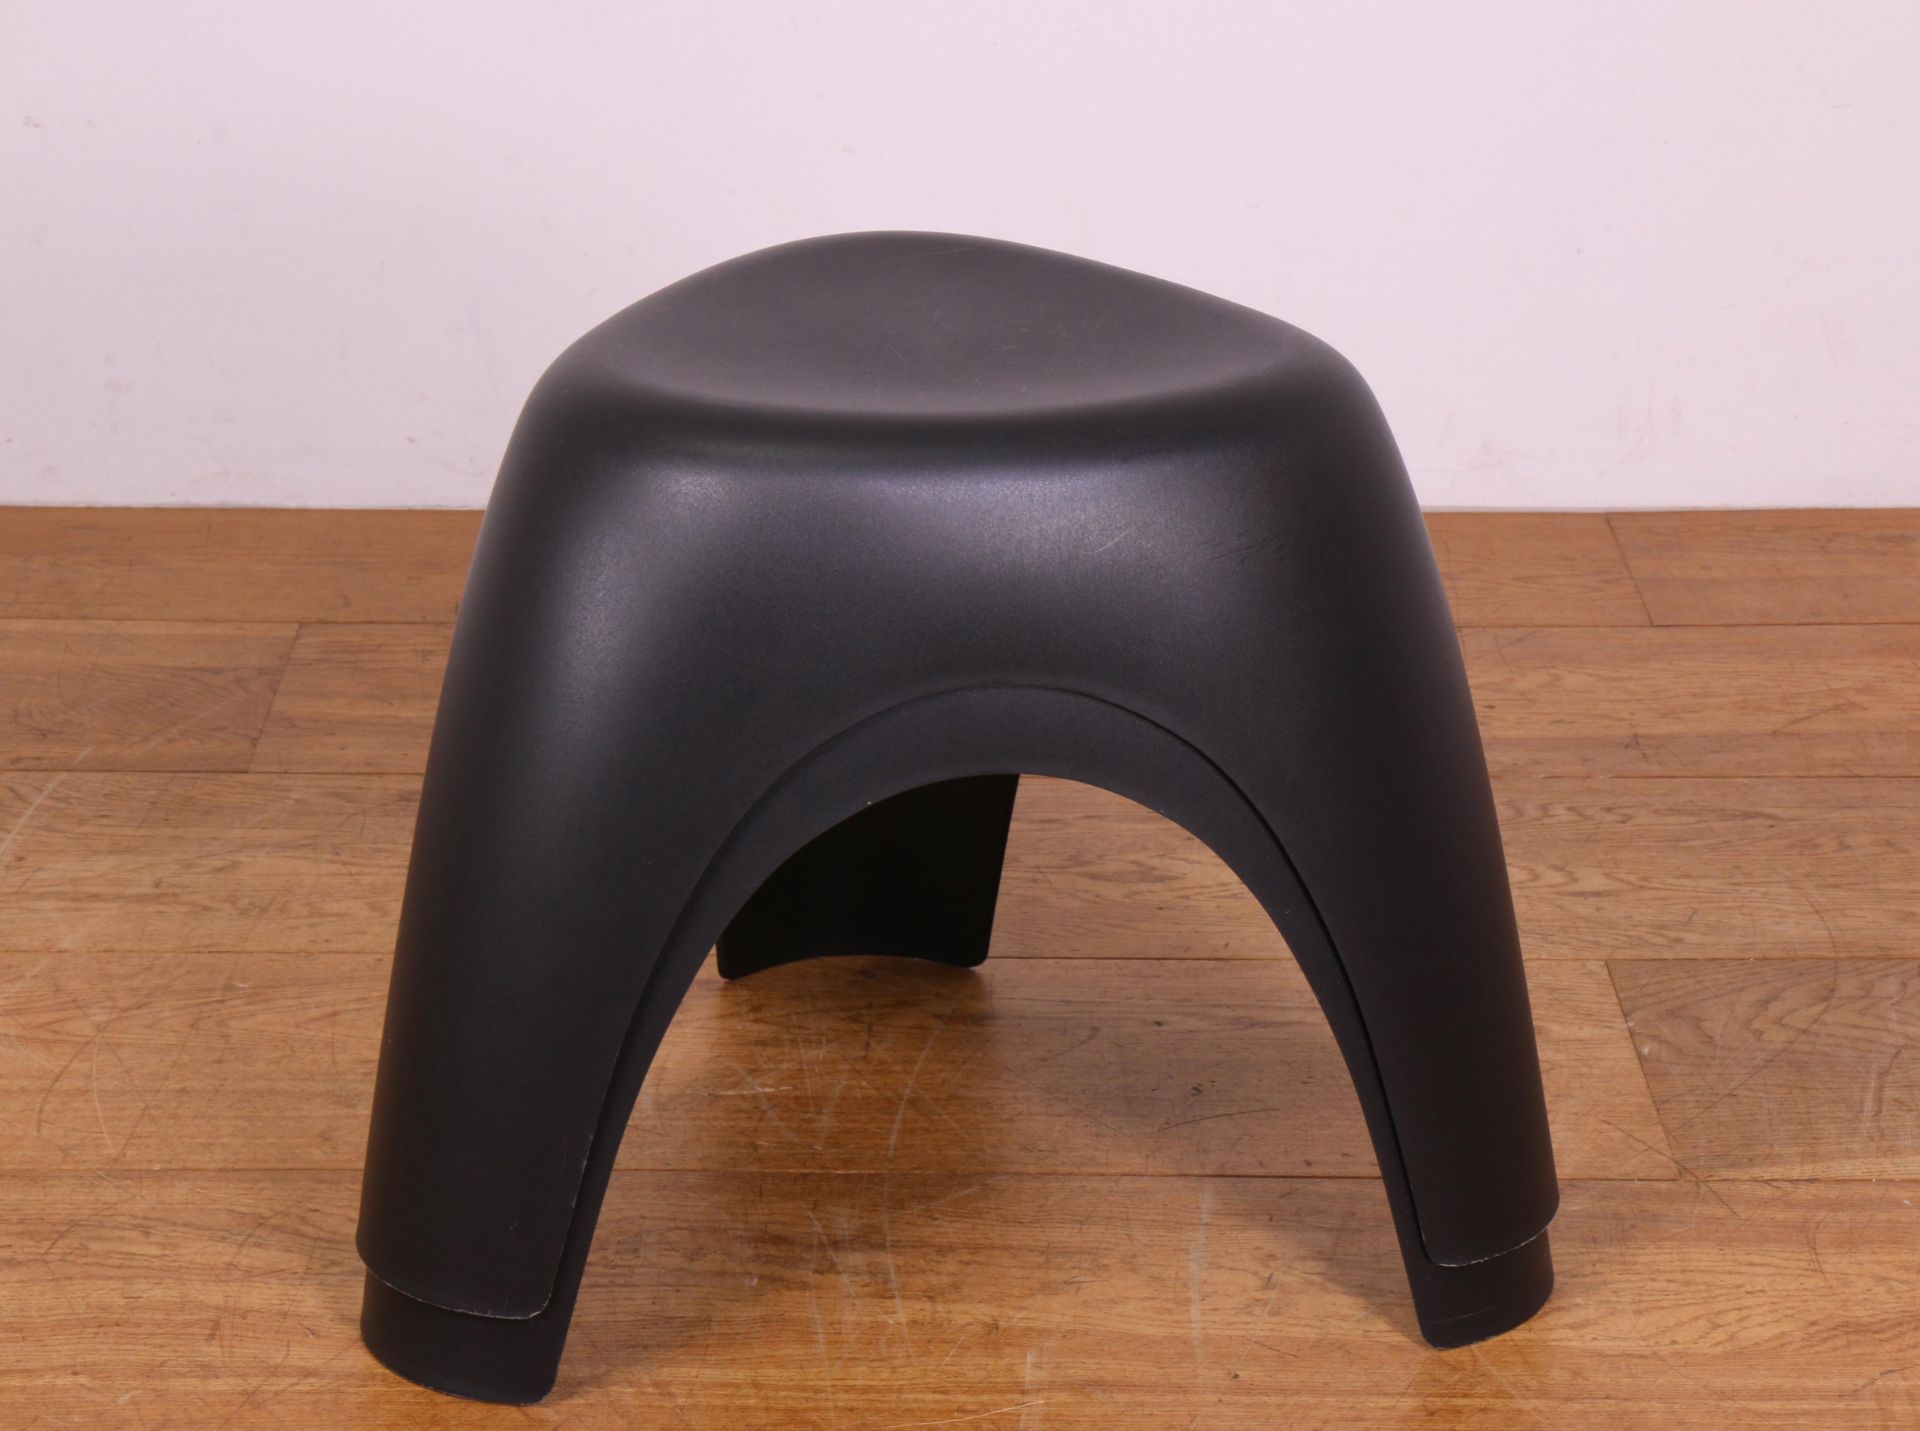 Sori Yanagi voor Vitra, Zwitserland, paar zwart kunststoffen krukjes, 'Elephant Stools', ontwerp 195 - Image 2 of 2